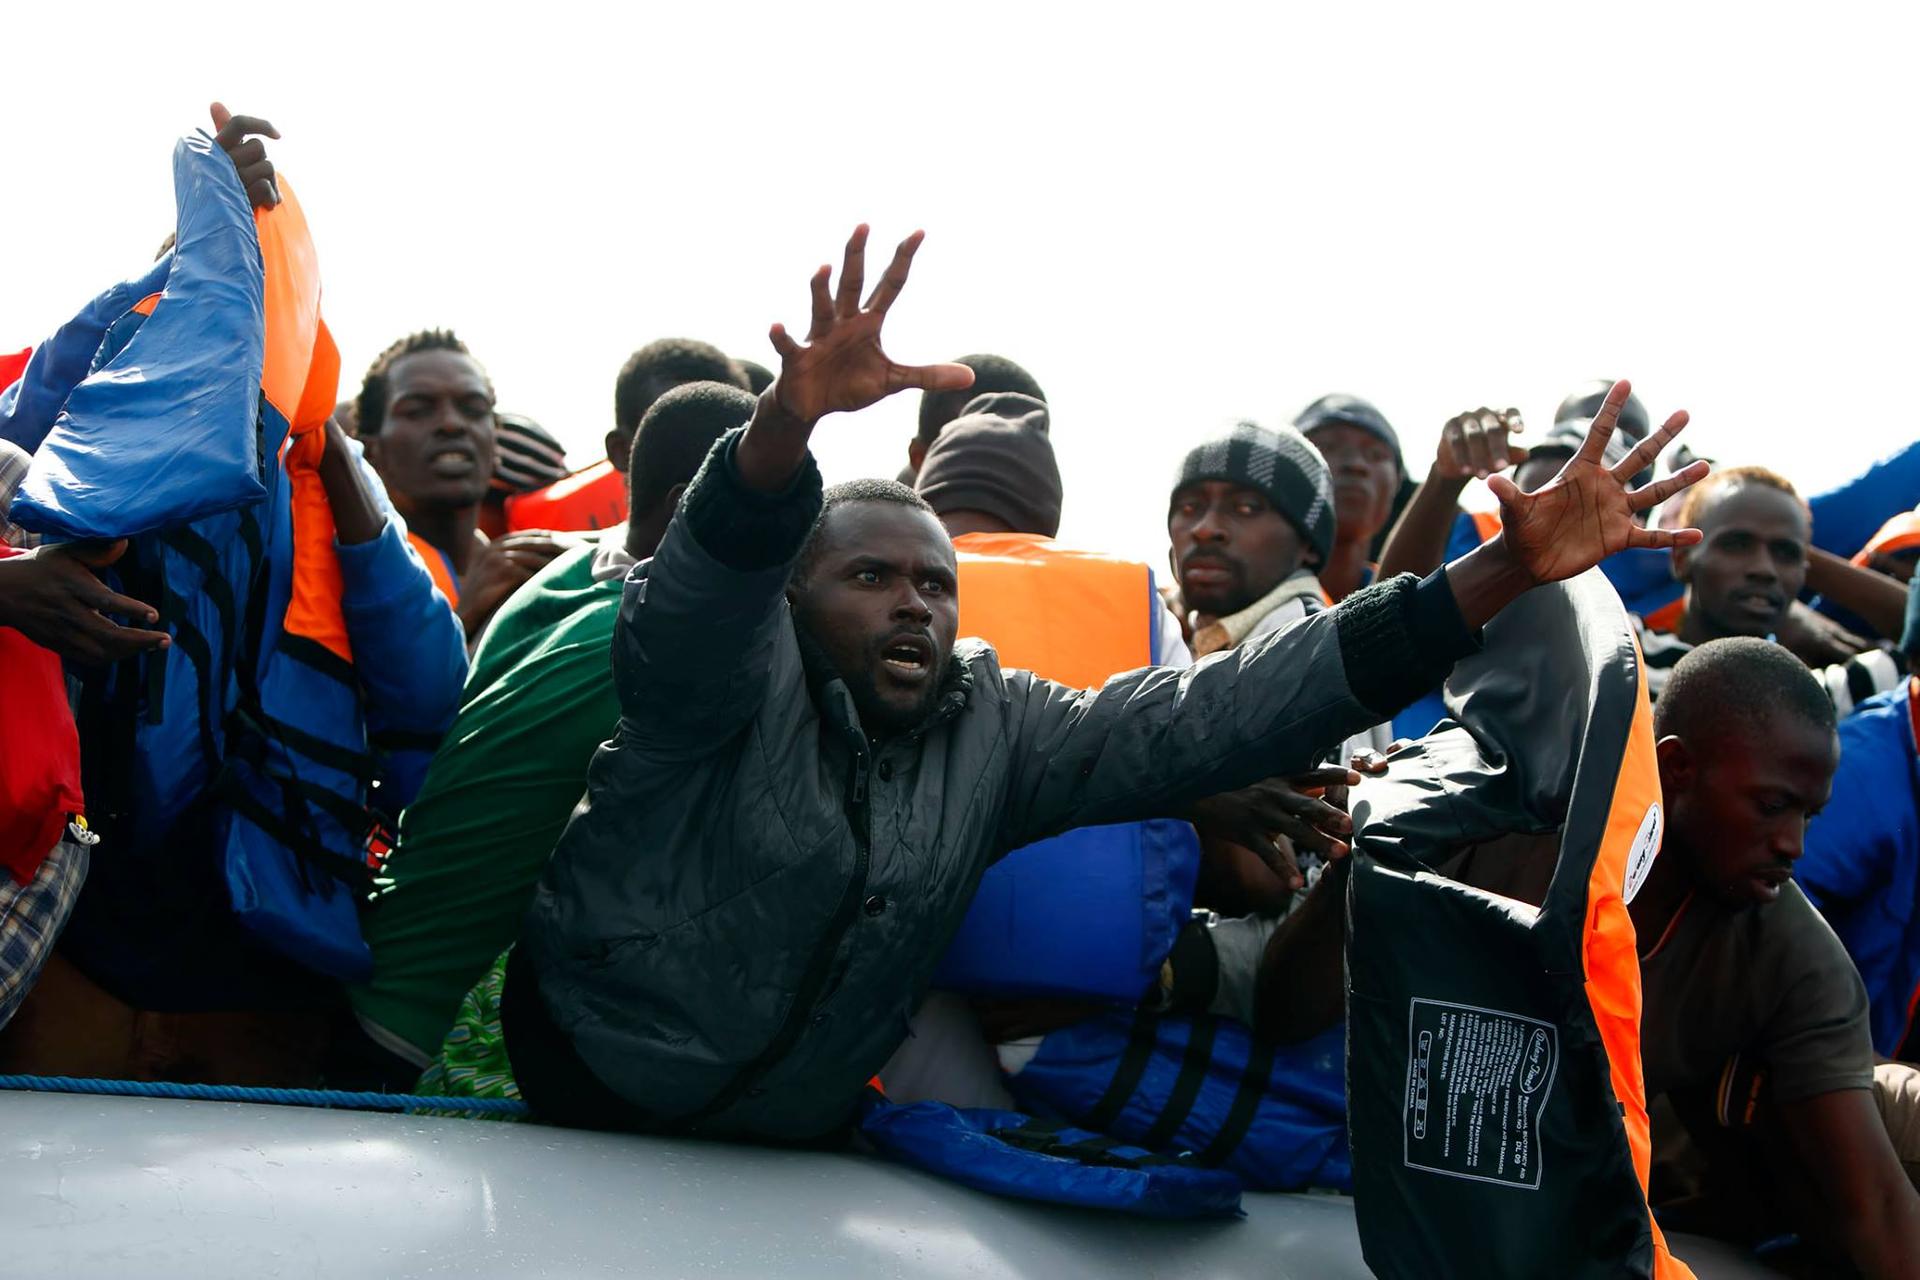 MOAS rescuing migrants in November, 2014.